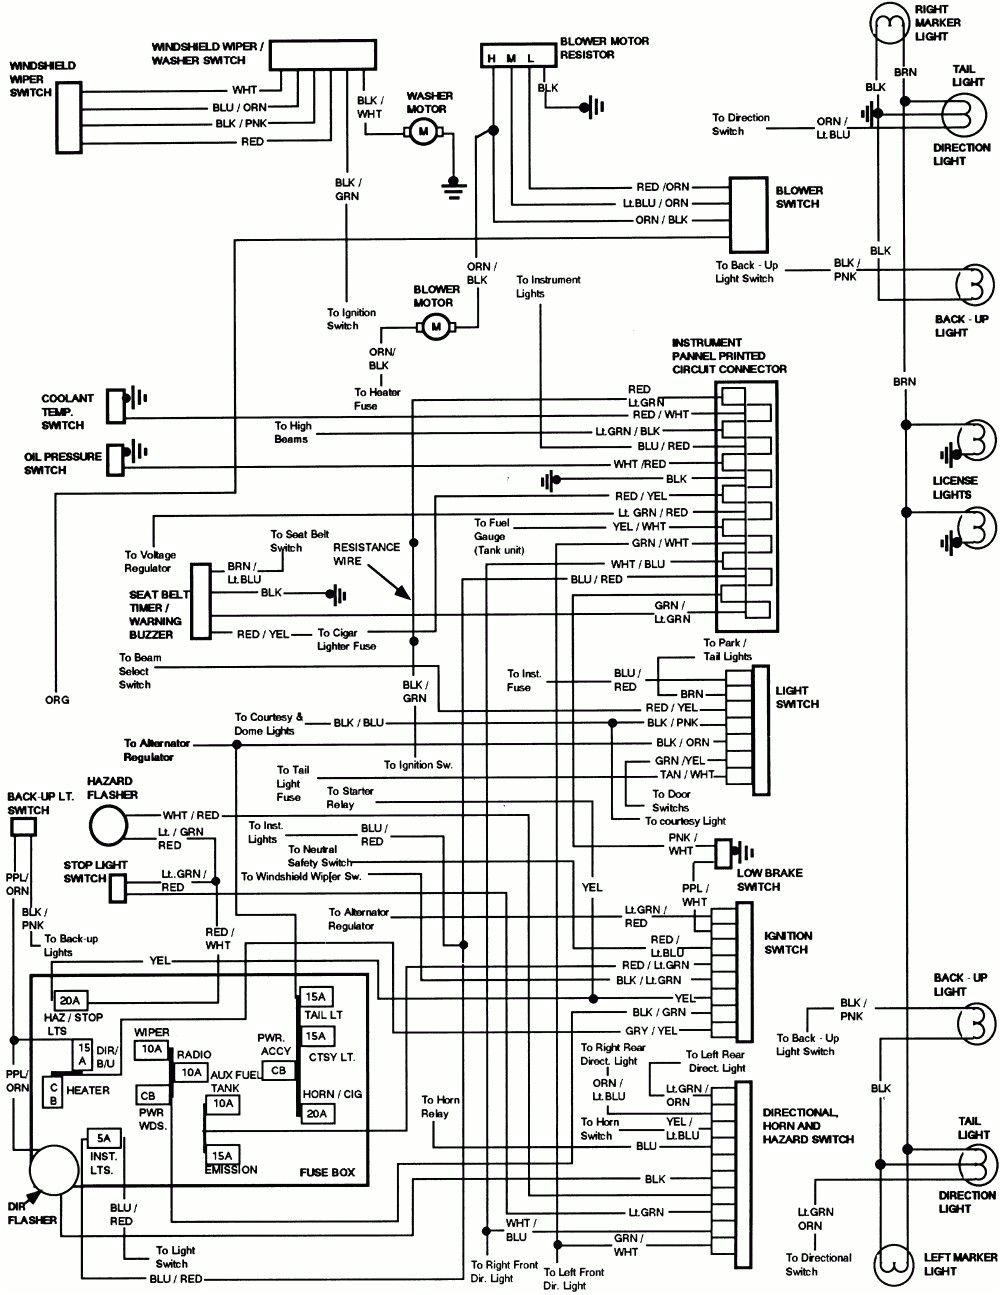 1999 ford f 150 wiring diagram manual guide wiring diagram e280a2 inside 1997 ford f 250 engine diagram jpg